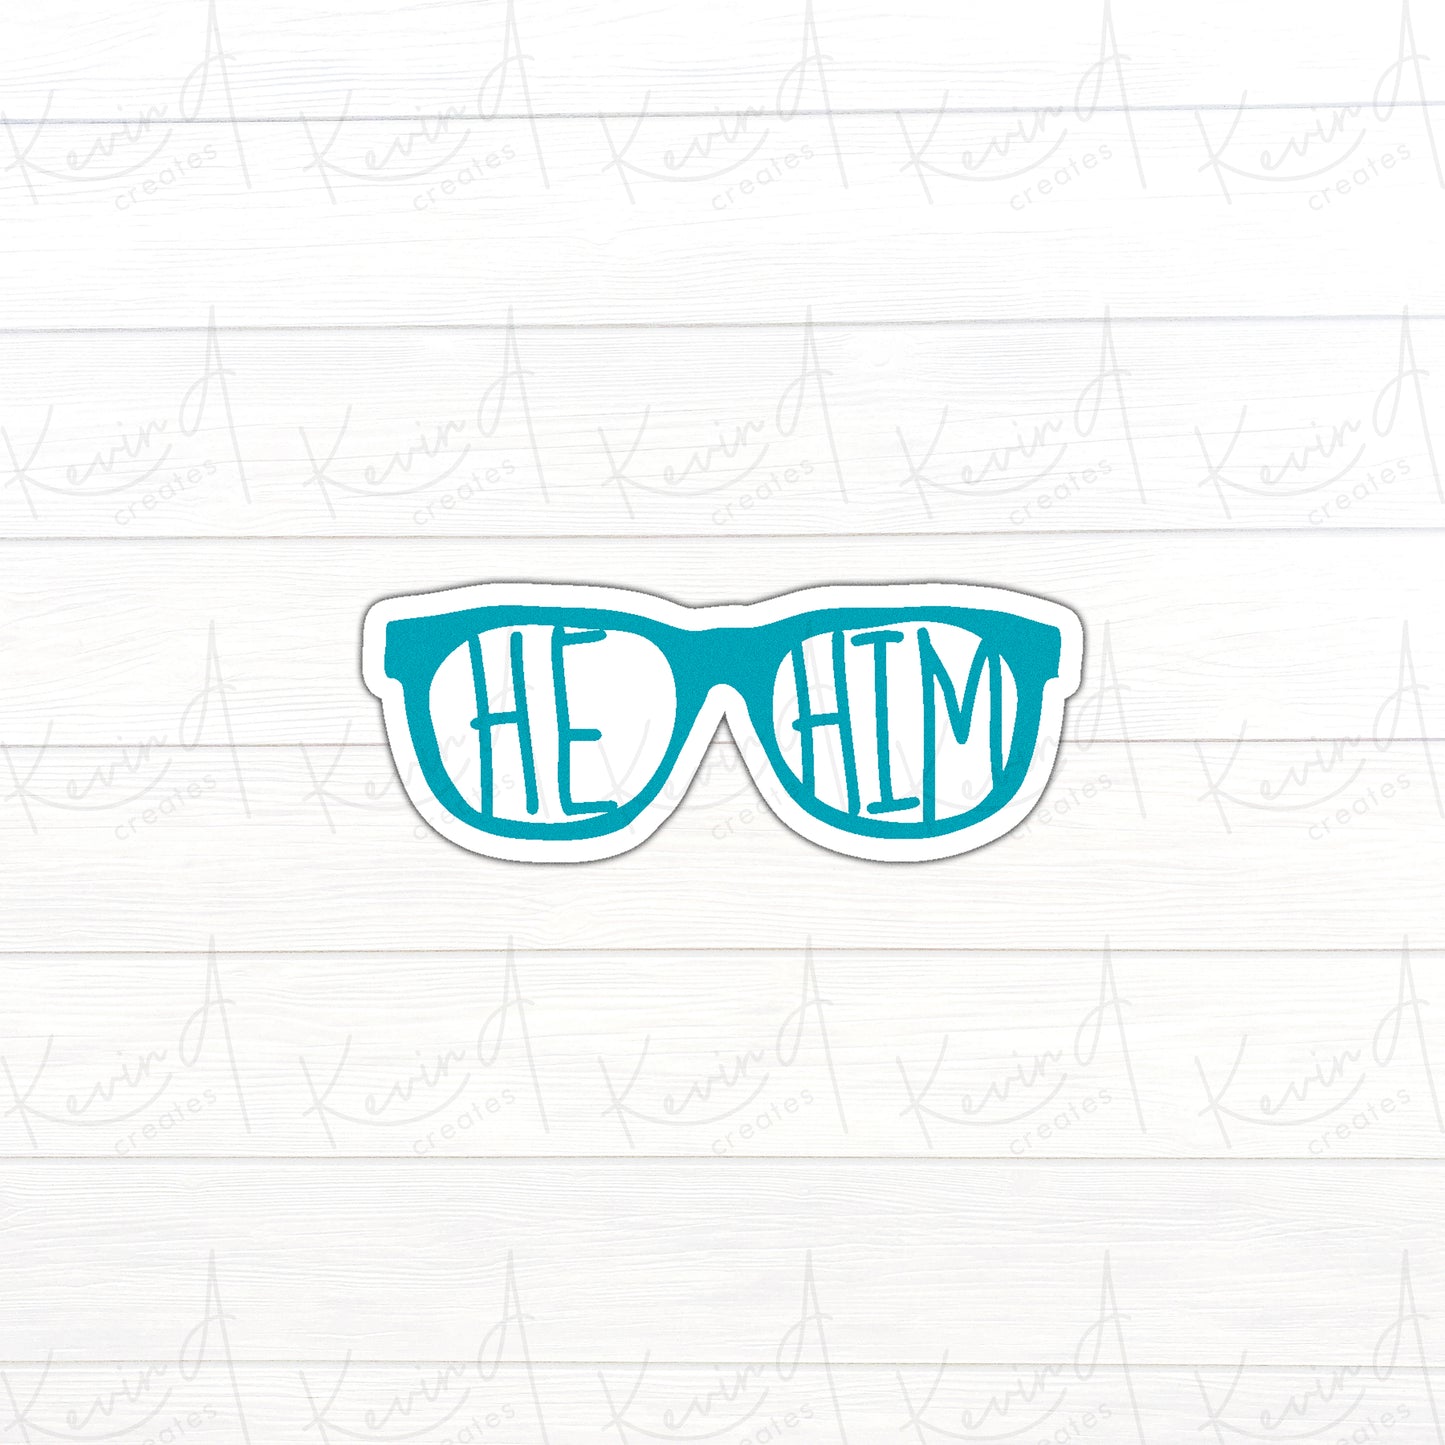 DC-026, "He/Him Sunglasses" Pronouns Pride Die Cut Stickers